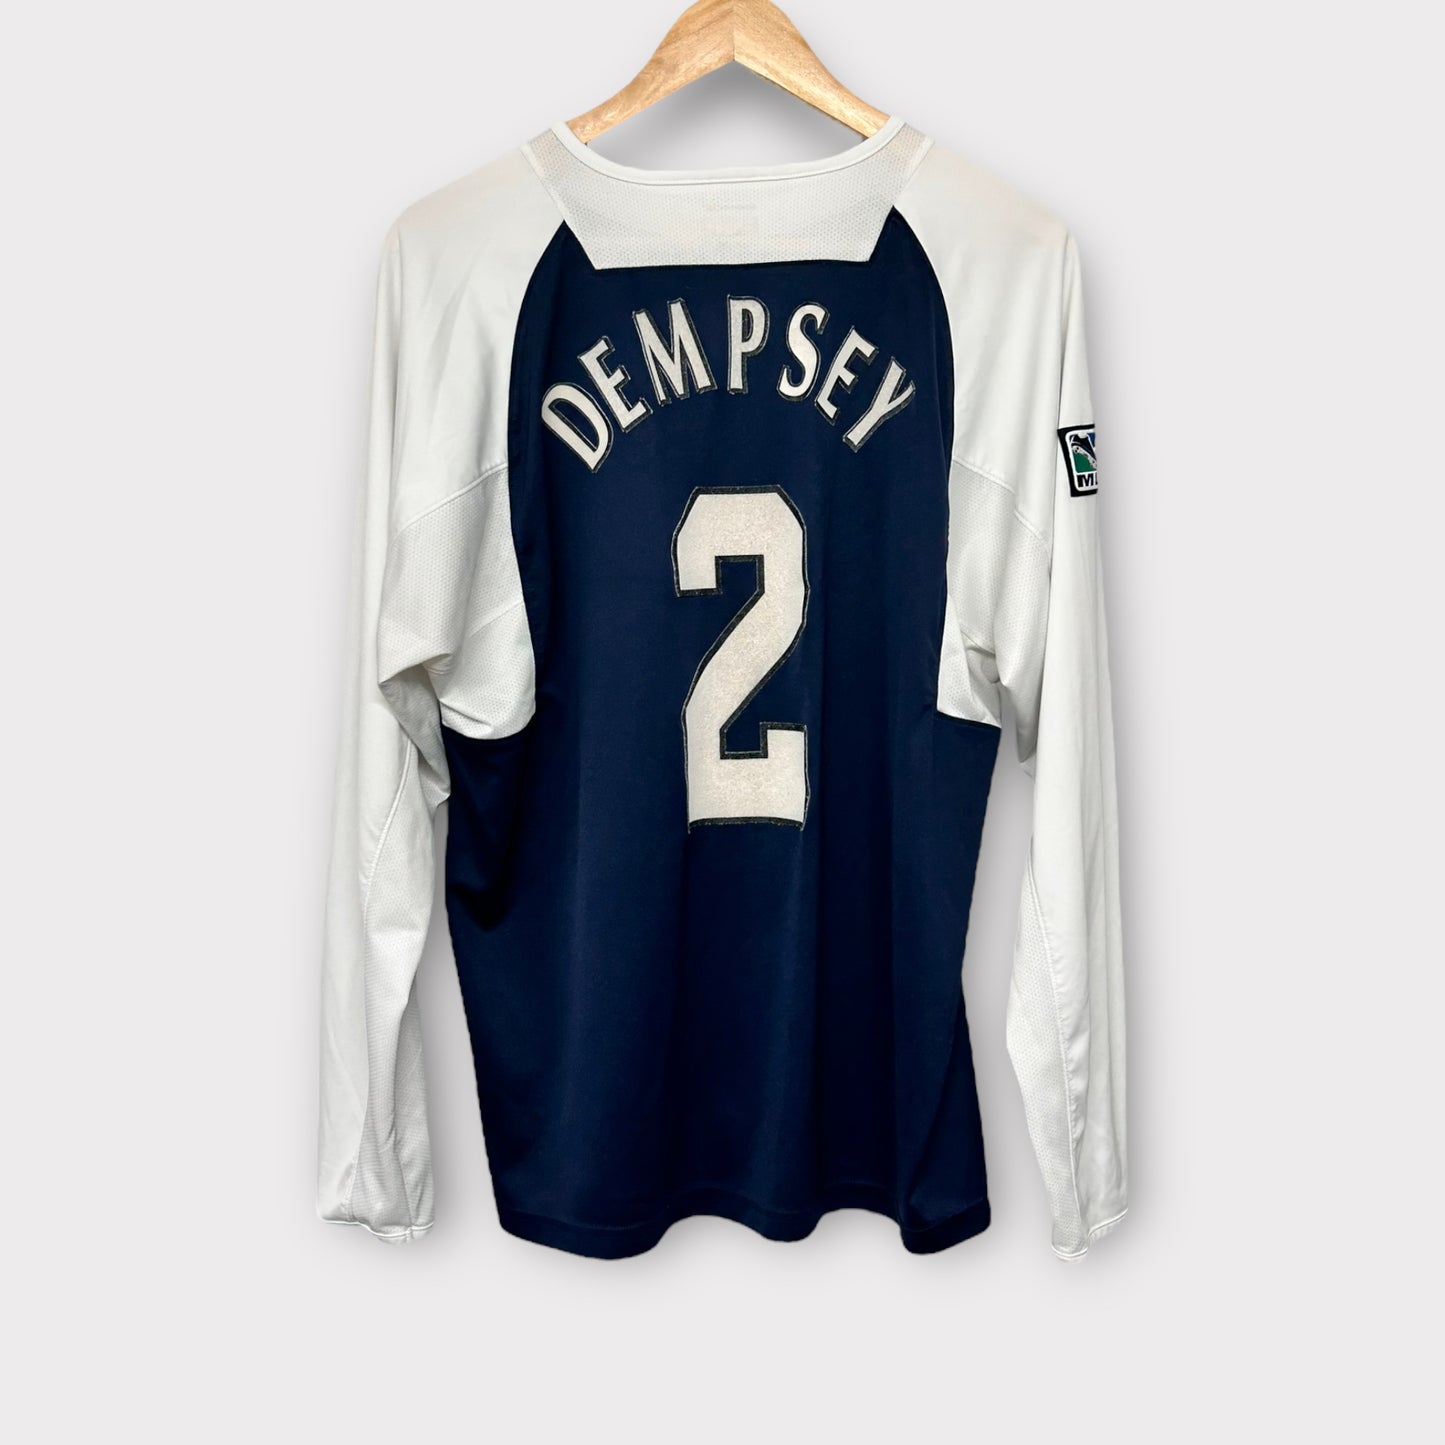 New England Revolution 2004 Home Shirt - Dempsey #2 (XL)